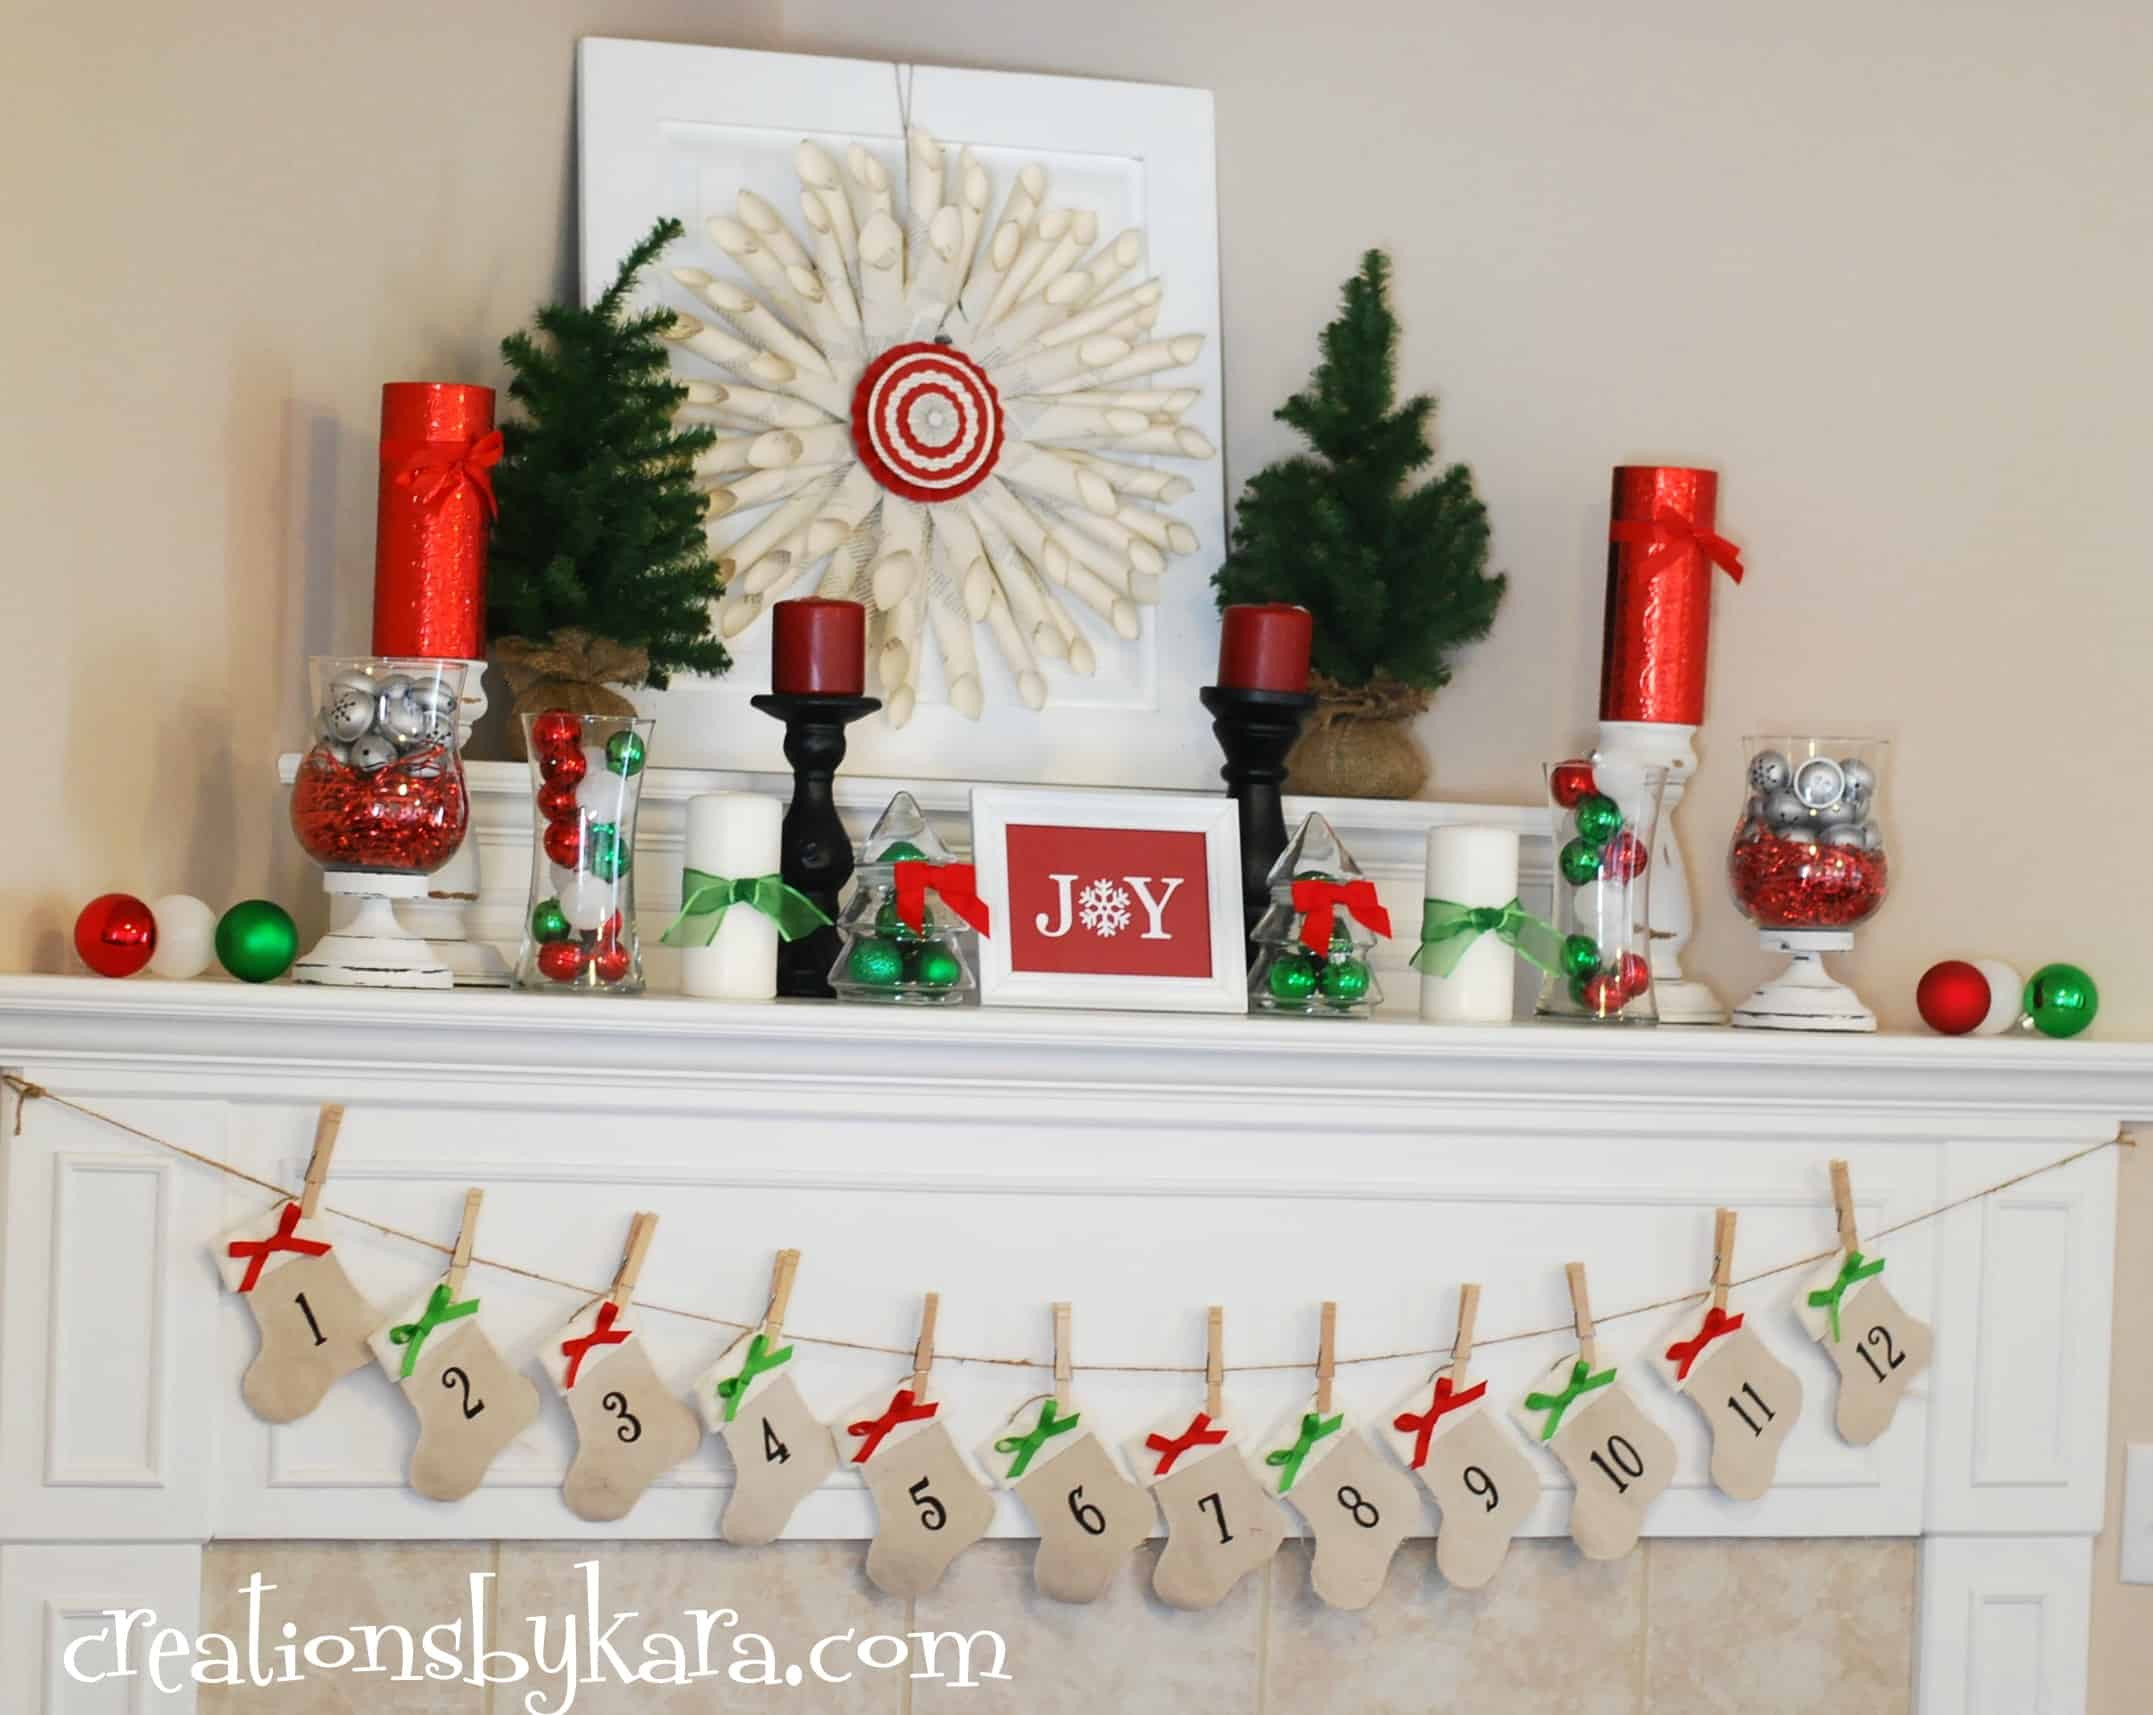 Diy Christmas Fireplace Decorations
 Painted Oak Fireplace Mantel